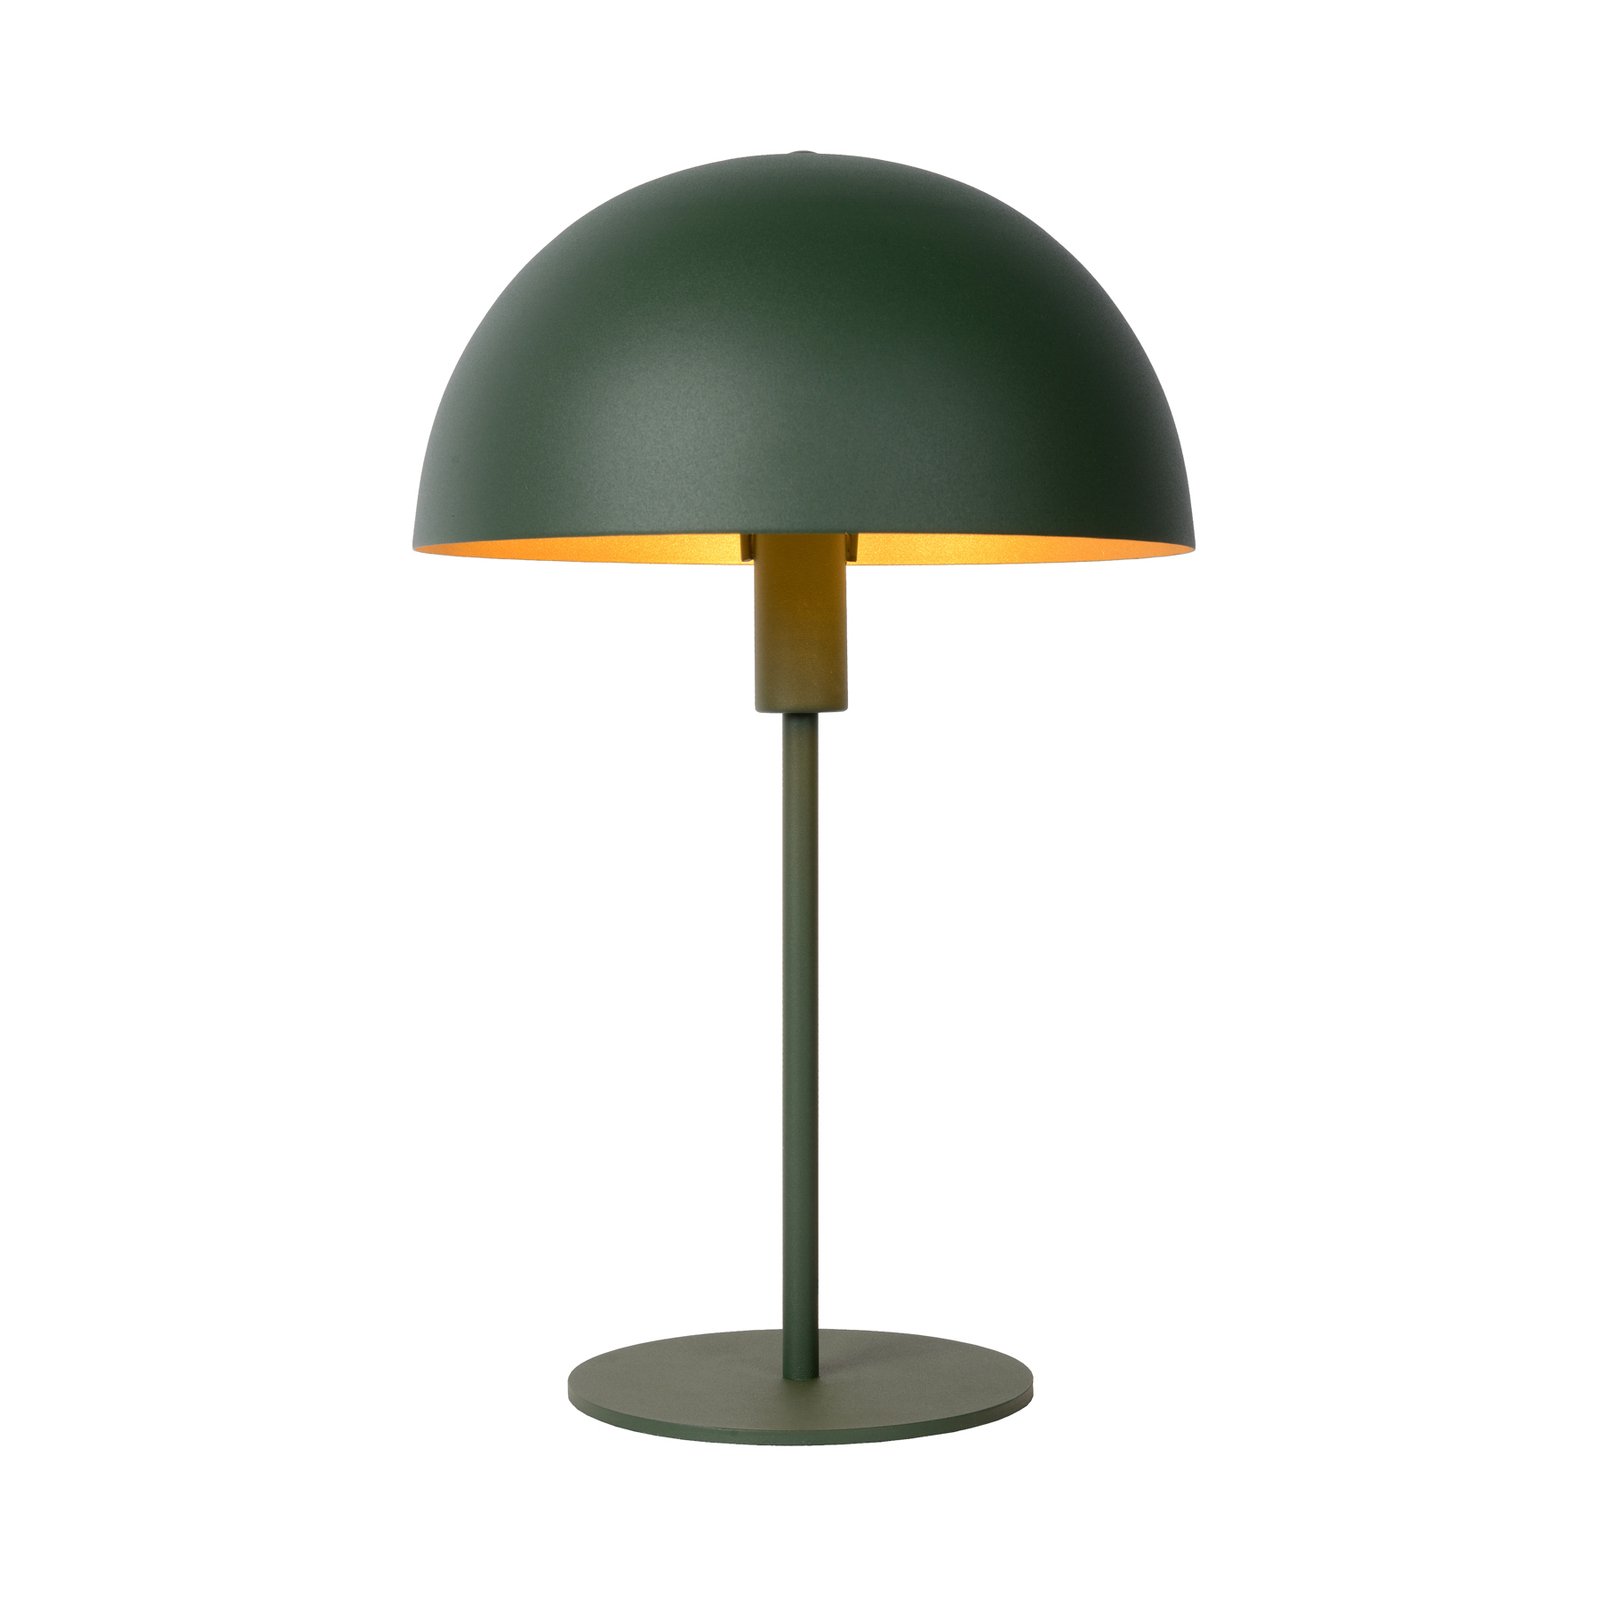 Stalen tafellamp Siemon, Ø 25 cm, groen